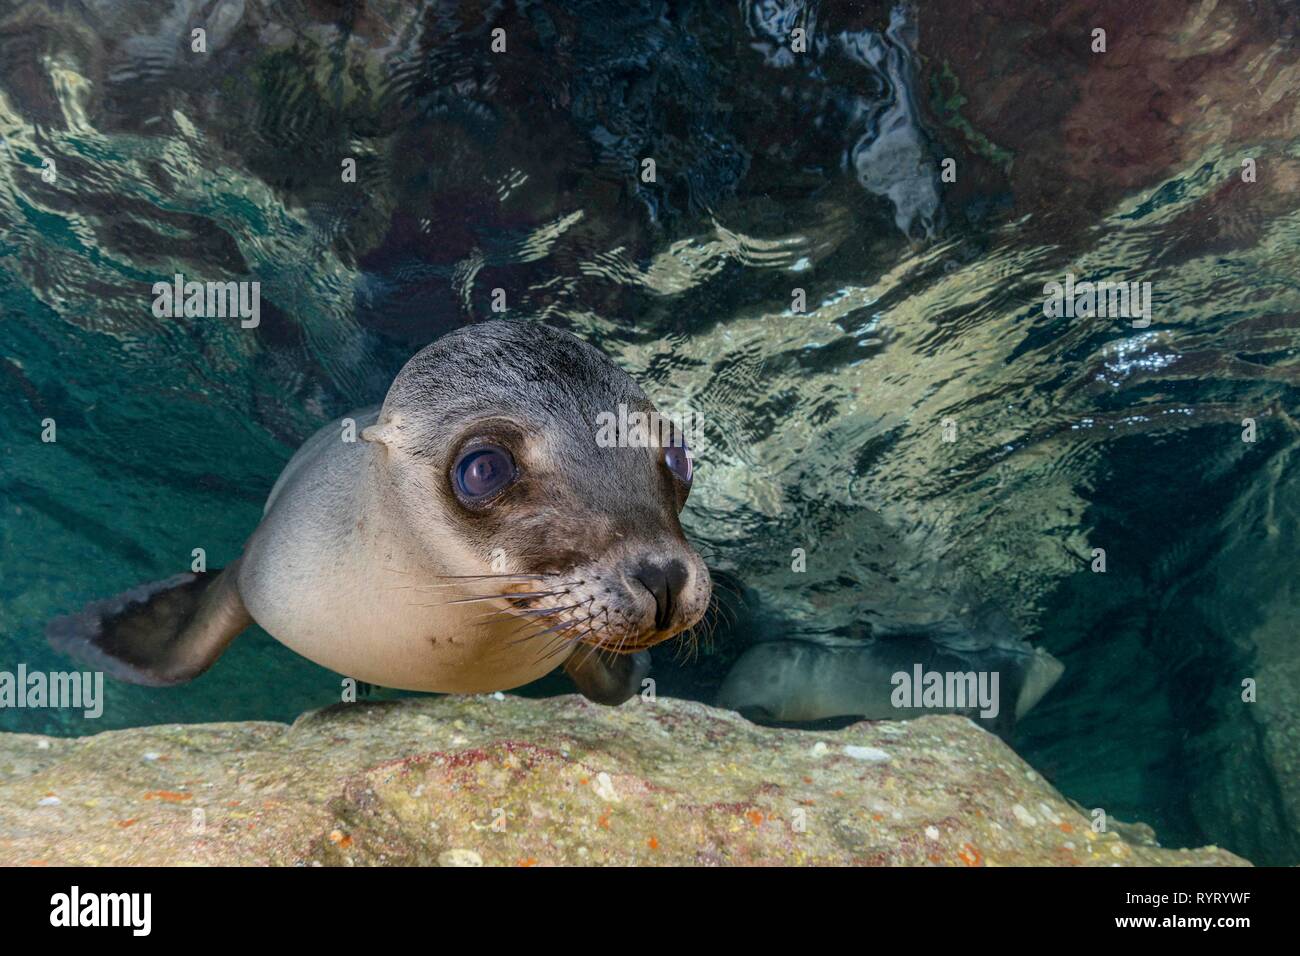 California sea lion (Zalophus californianus), Isla Los Islotes, La Paz, Mexico Stock Photo